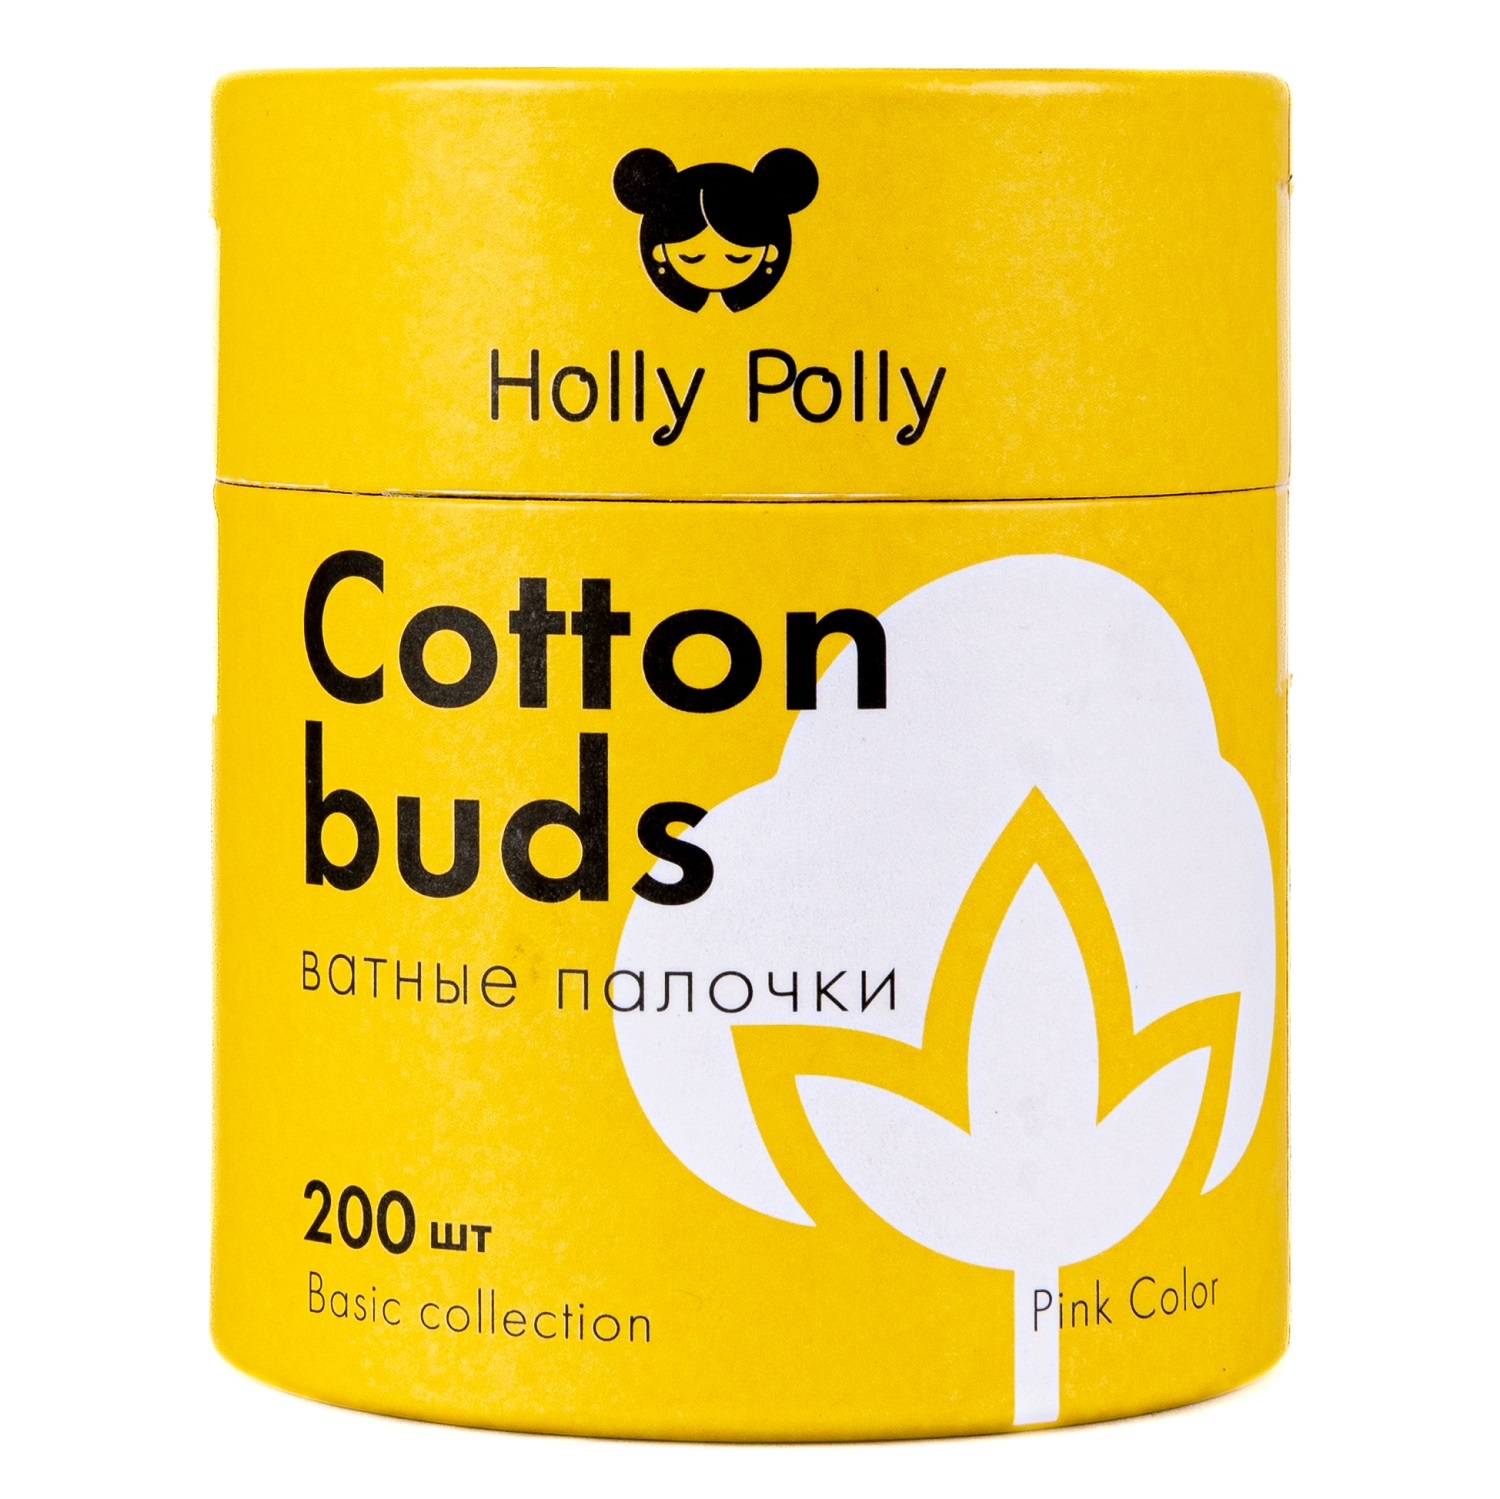 holly polly диски holly polly ватные косметические розовые 80 шт Holly Polly Косметические ватные палочки бамбуковые розовые, 200 шт (Holly Polly, Cotton Pads & Buds)